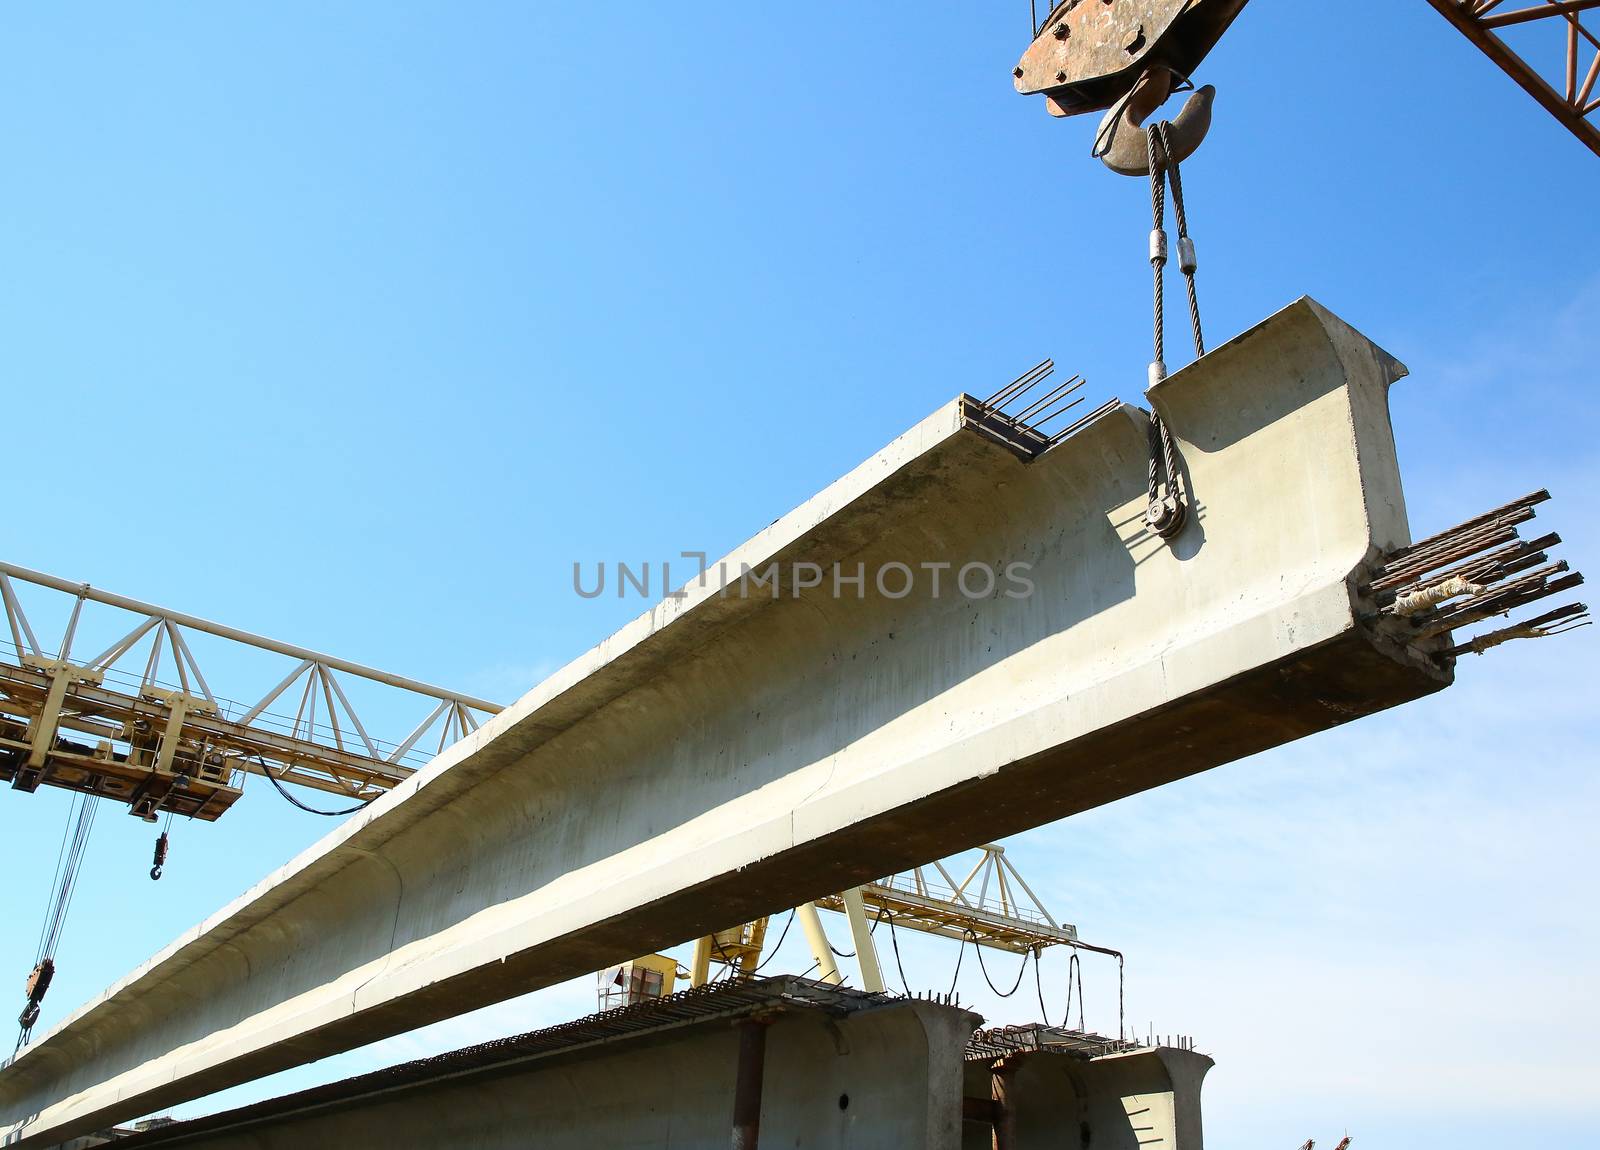 the concrete structure raise the crane